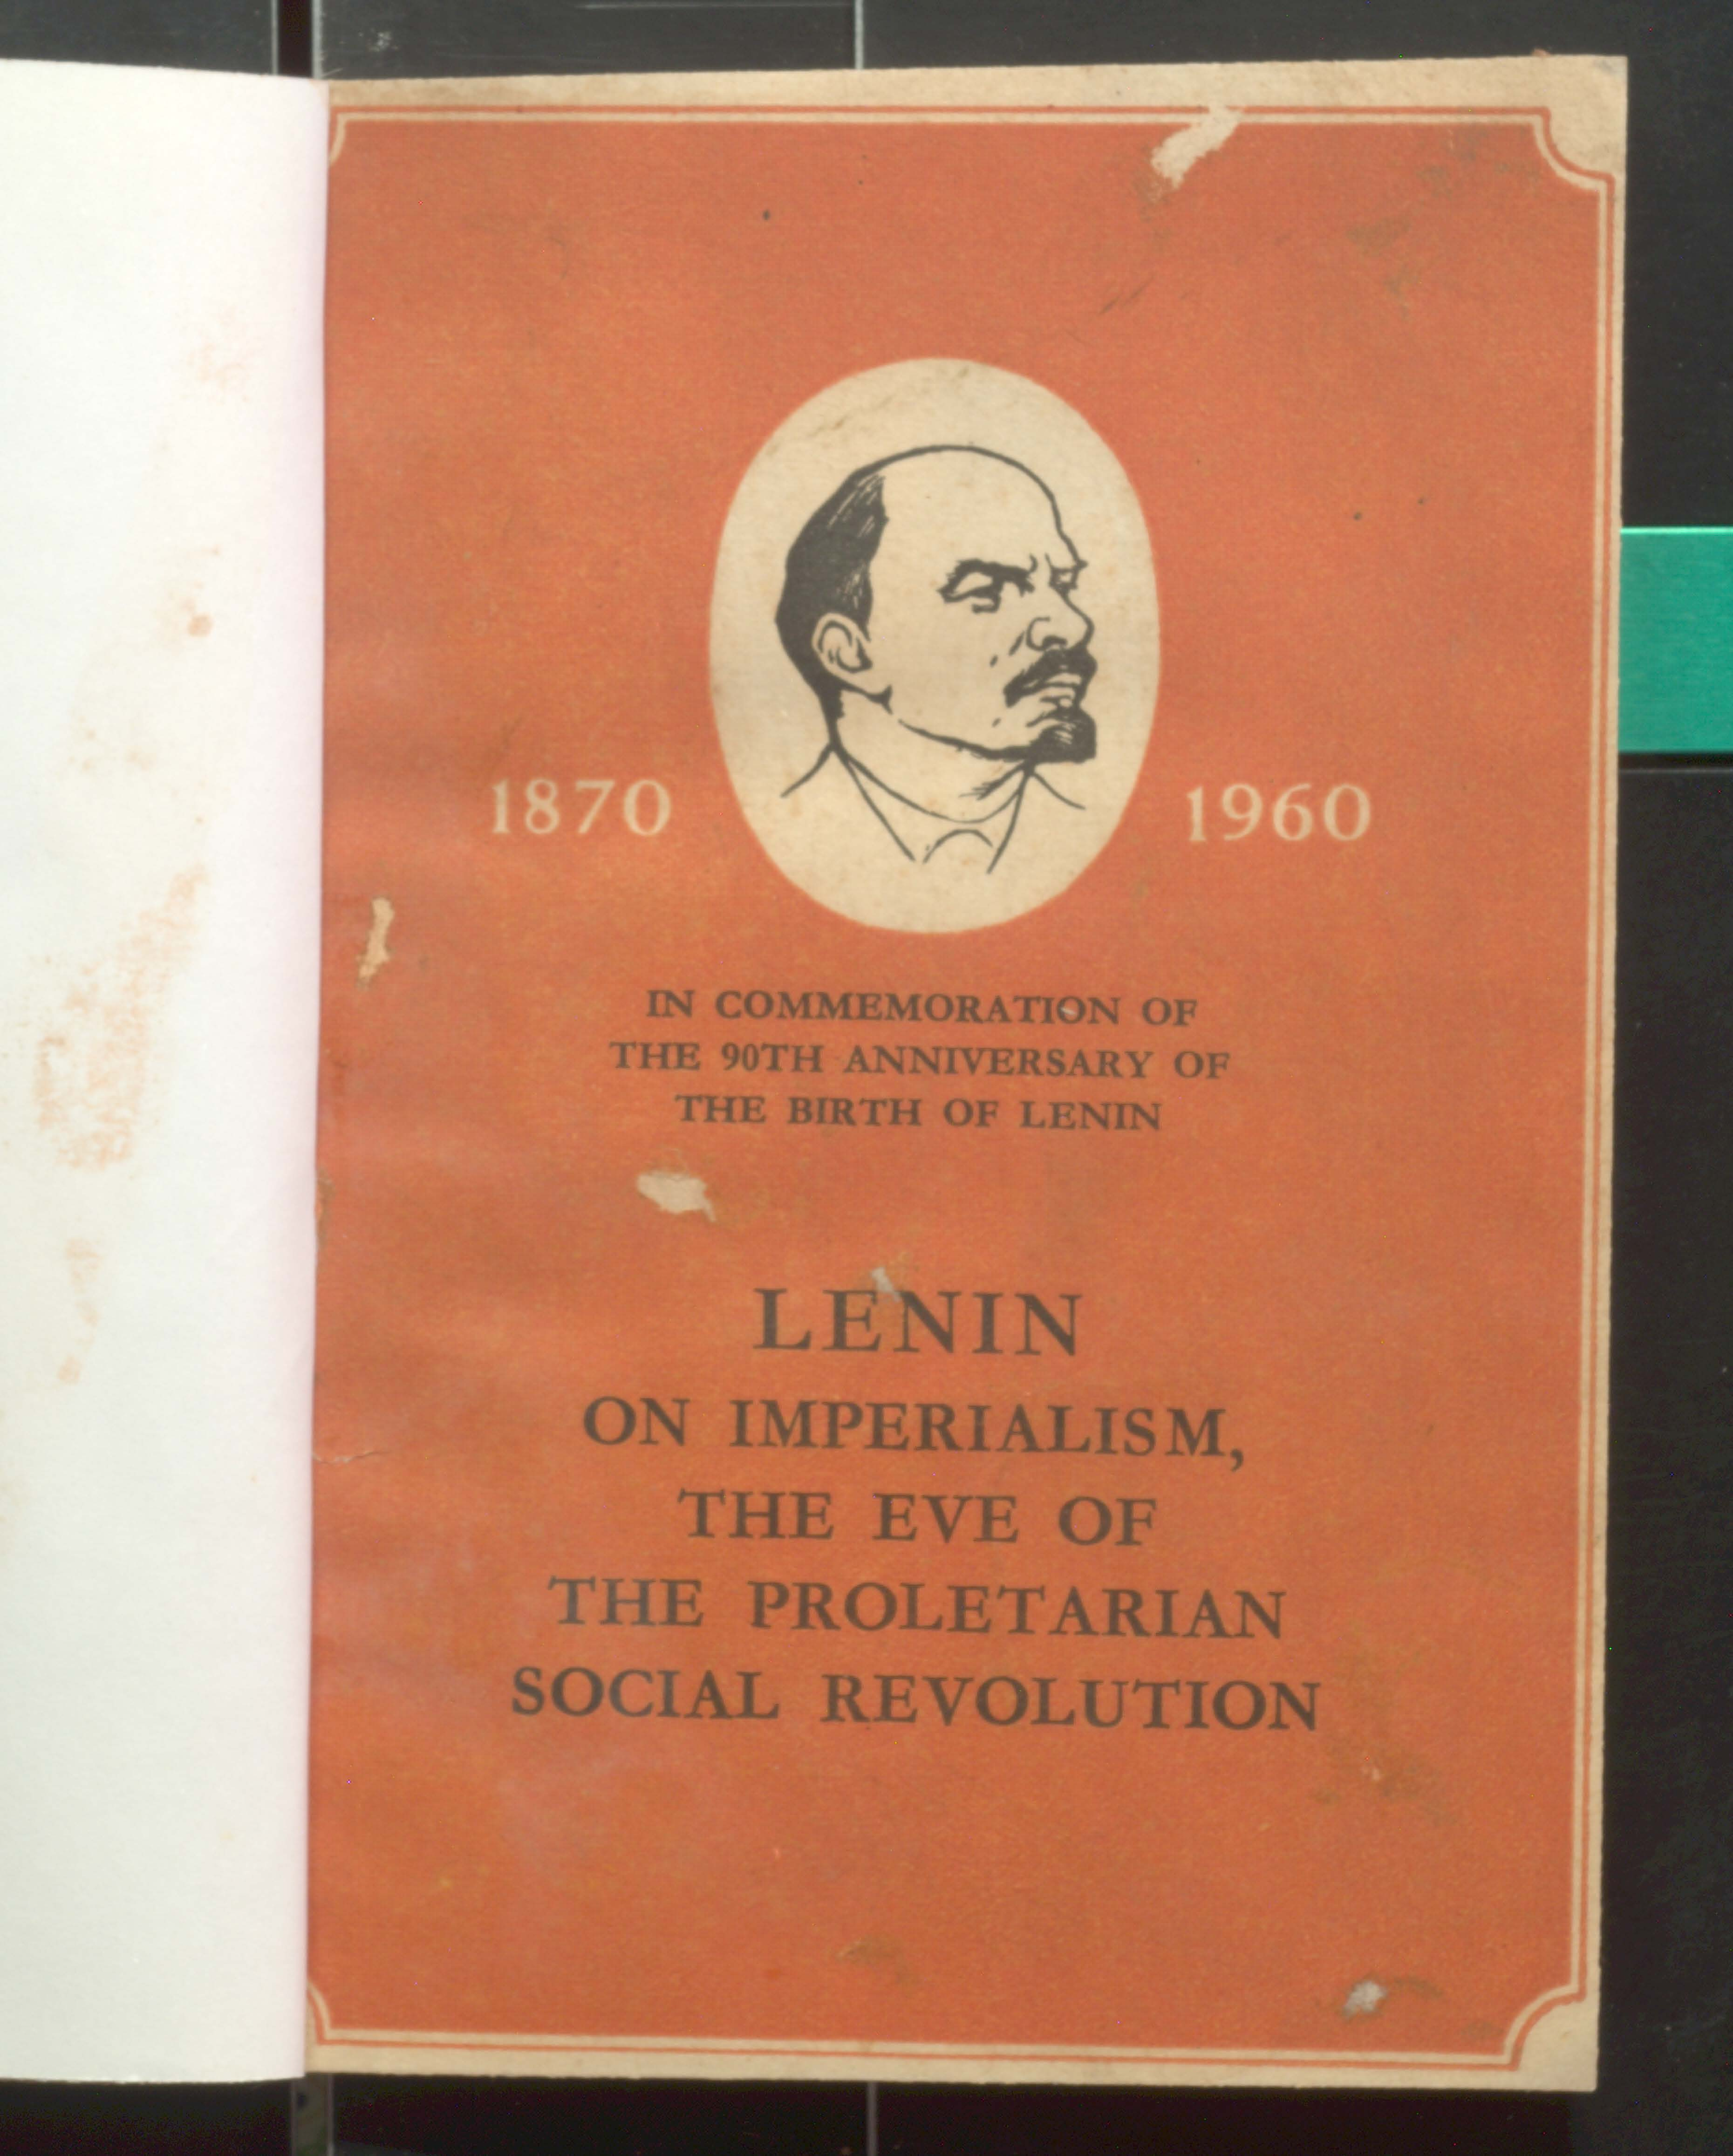 LENIN ON IMPERLALISM 'THE EVE OF THE PROLETARIOAN SOCIAL REVOLUTION